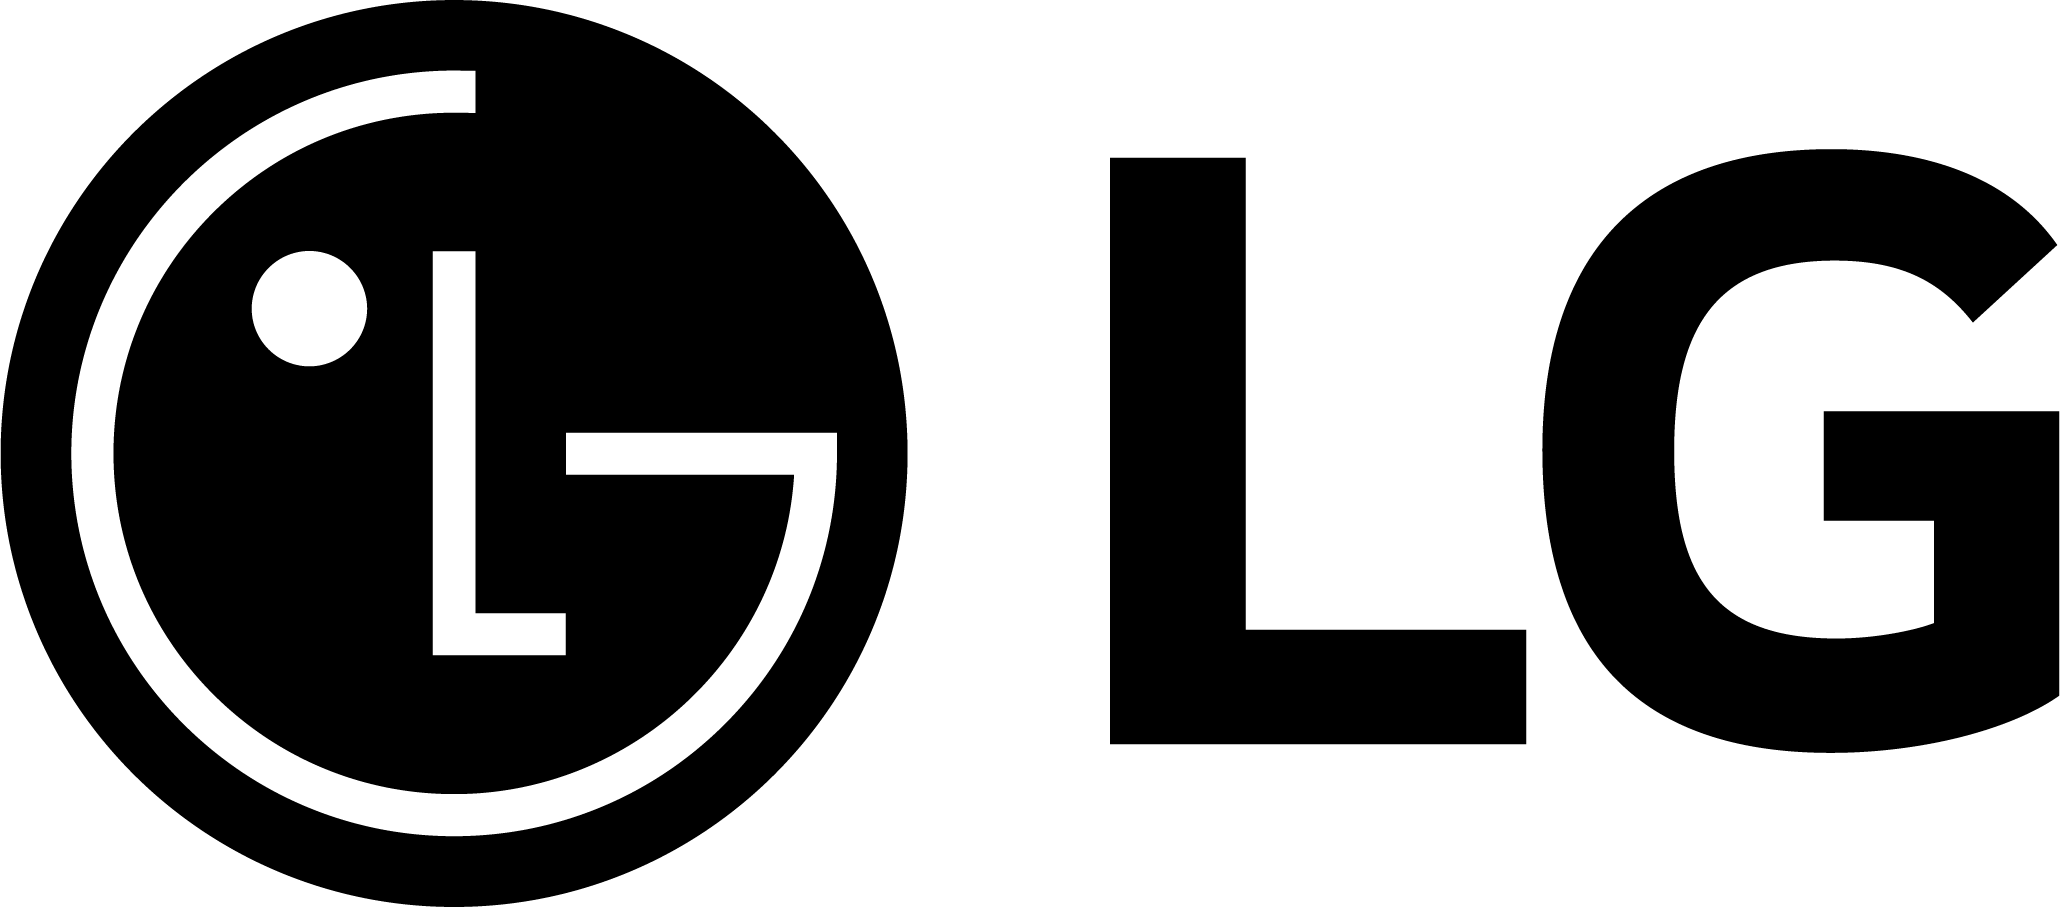 LG Appliances logo